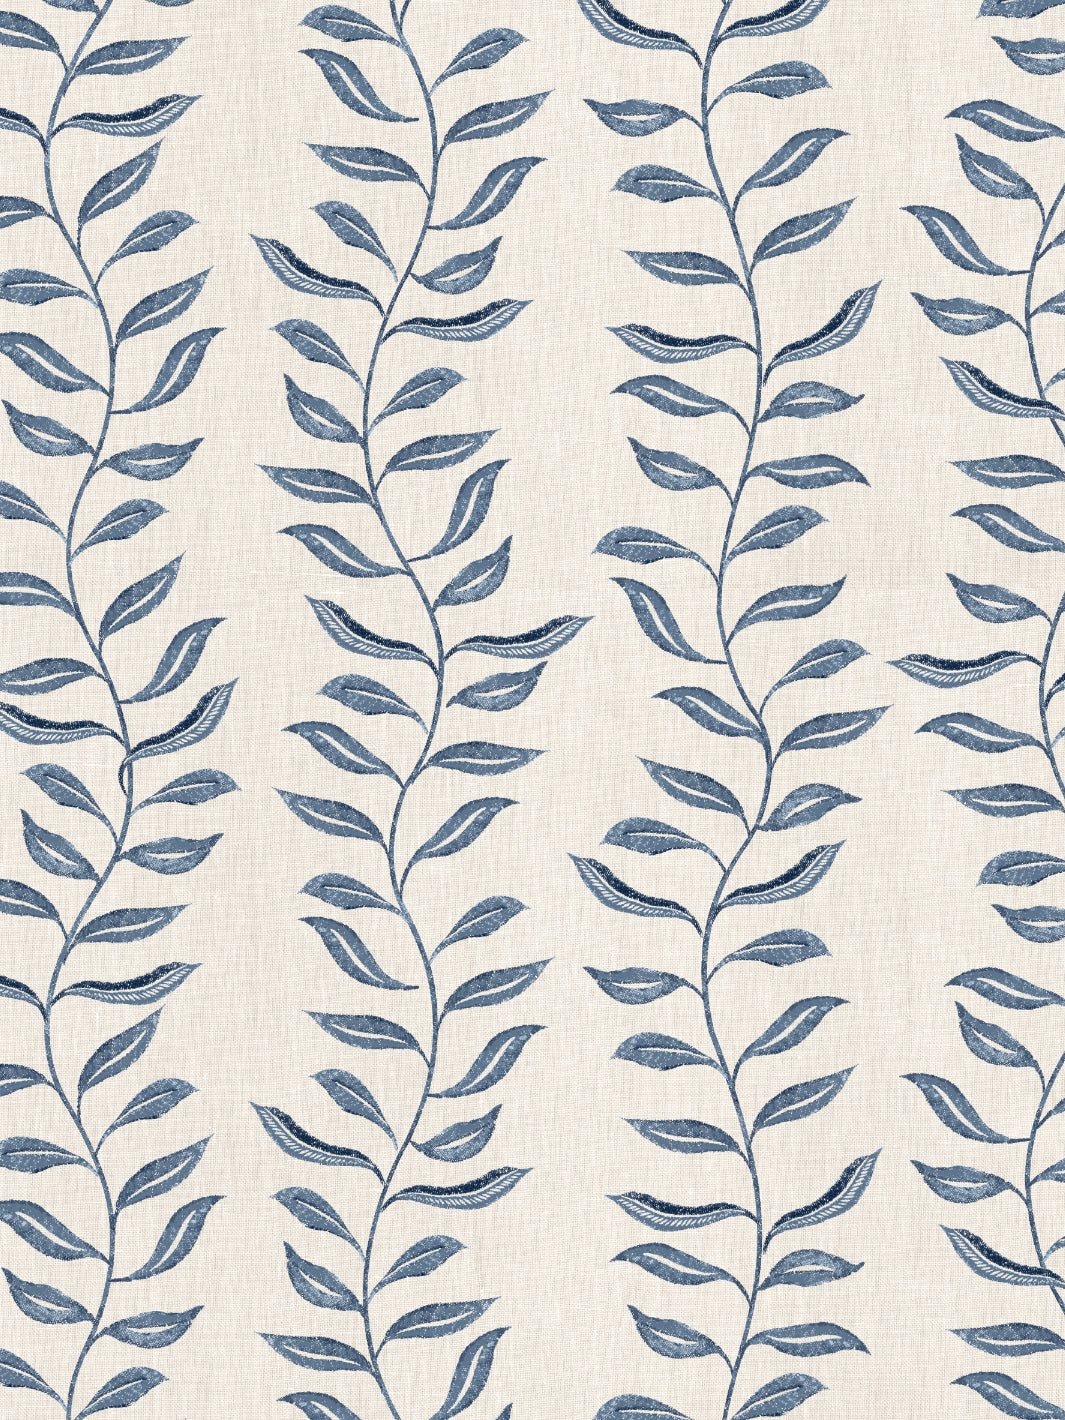 'Seneca' Linen Fabric by Nathan Turner - Darker Blue